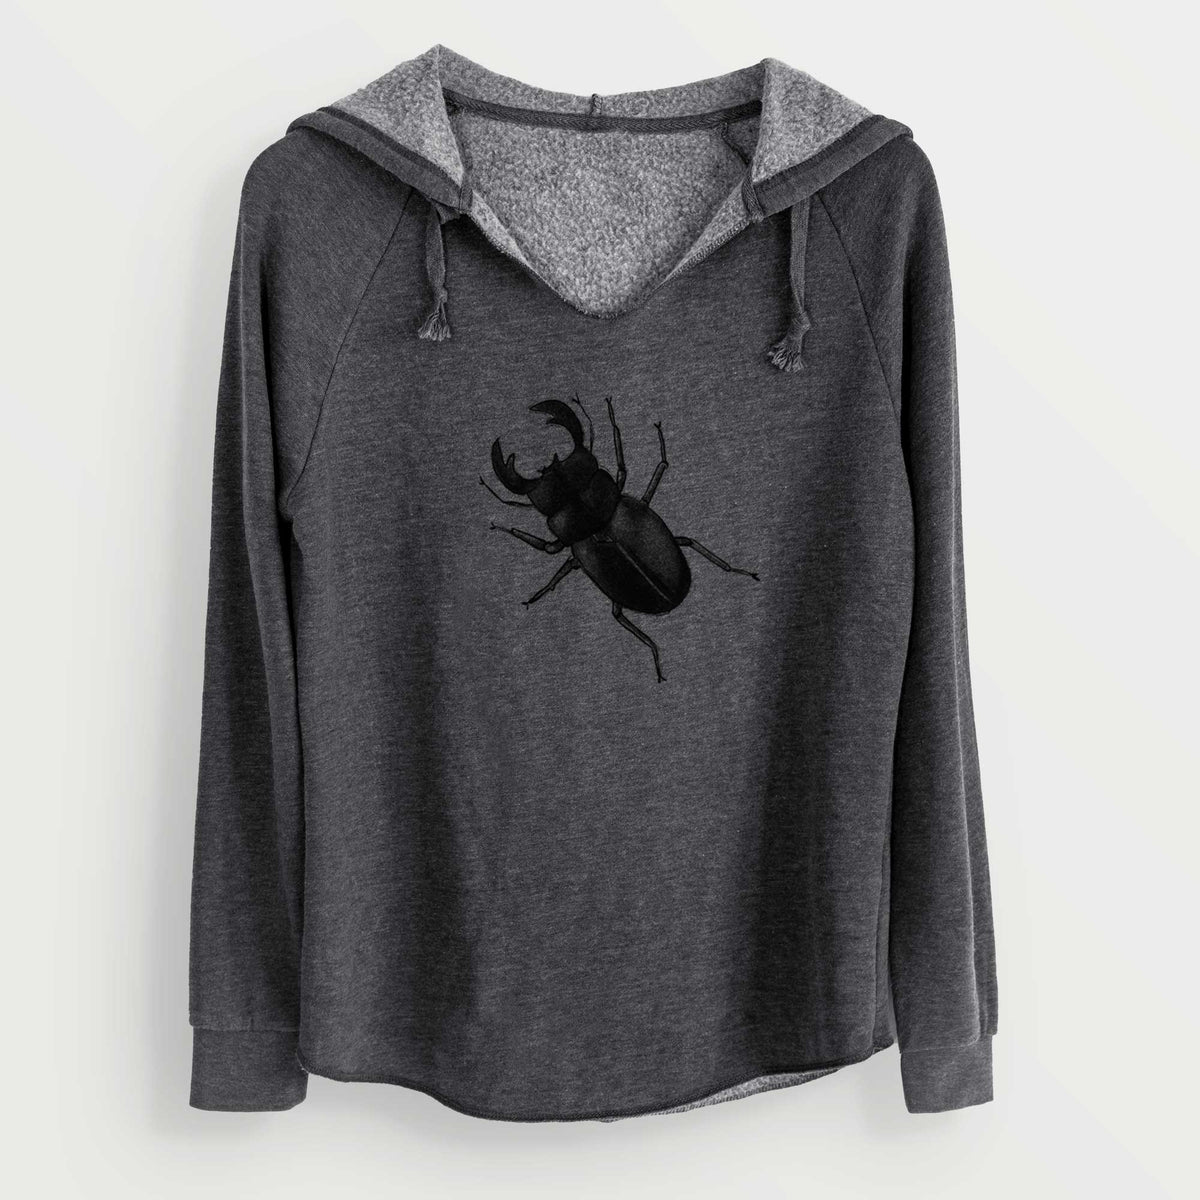 Dorcus titanus - Giant Stag Beetle - Cali Wave Hooded Sweatshirt